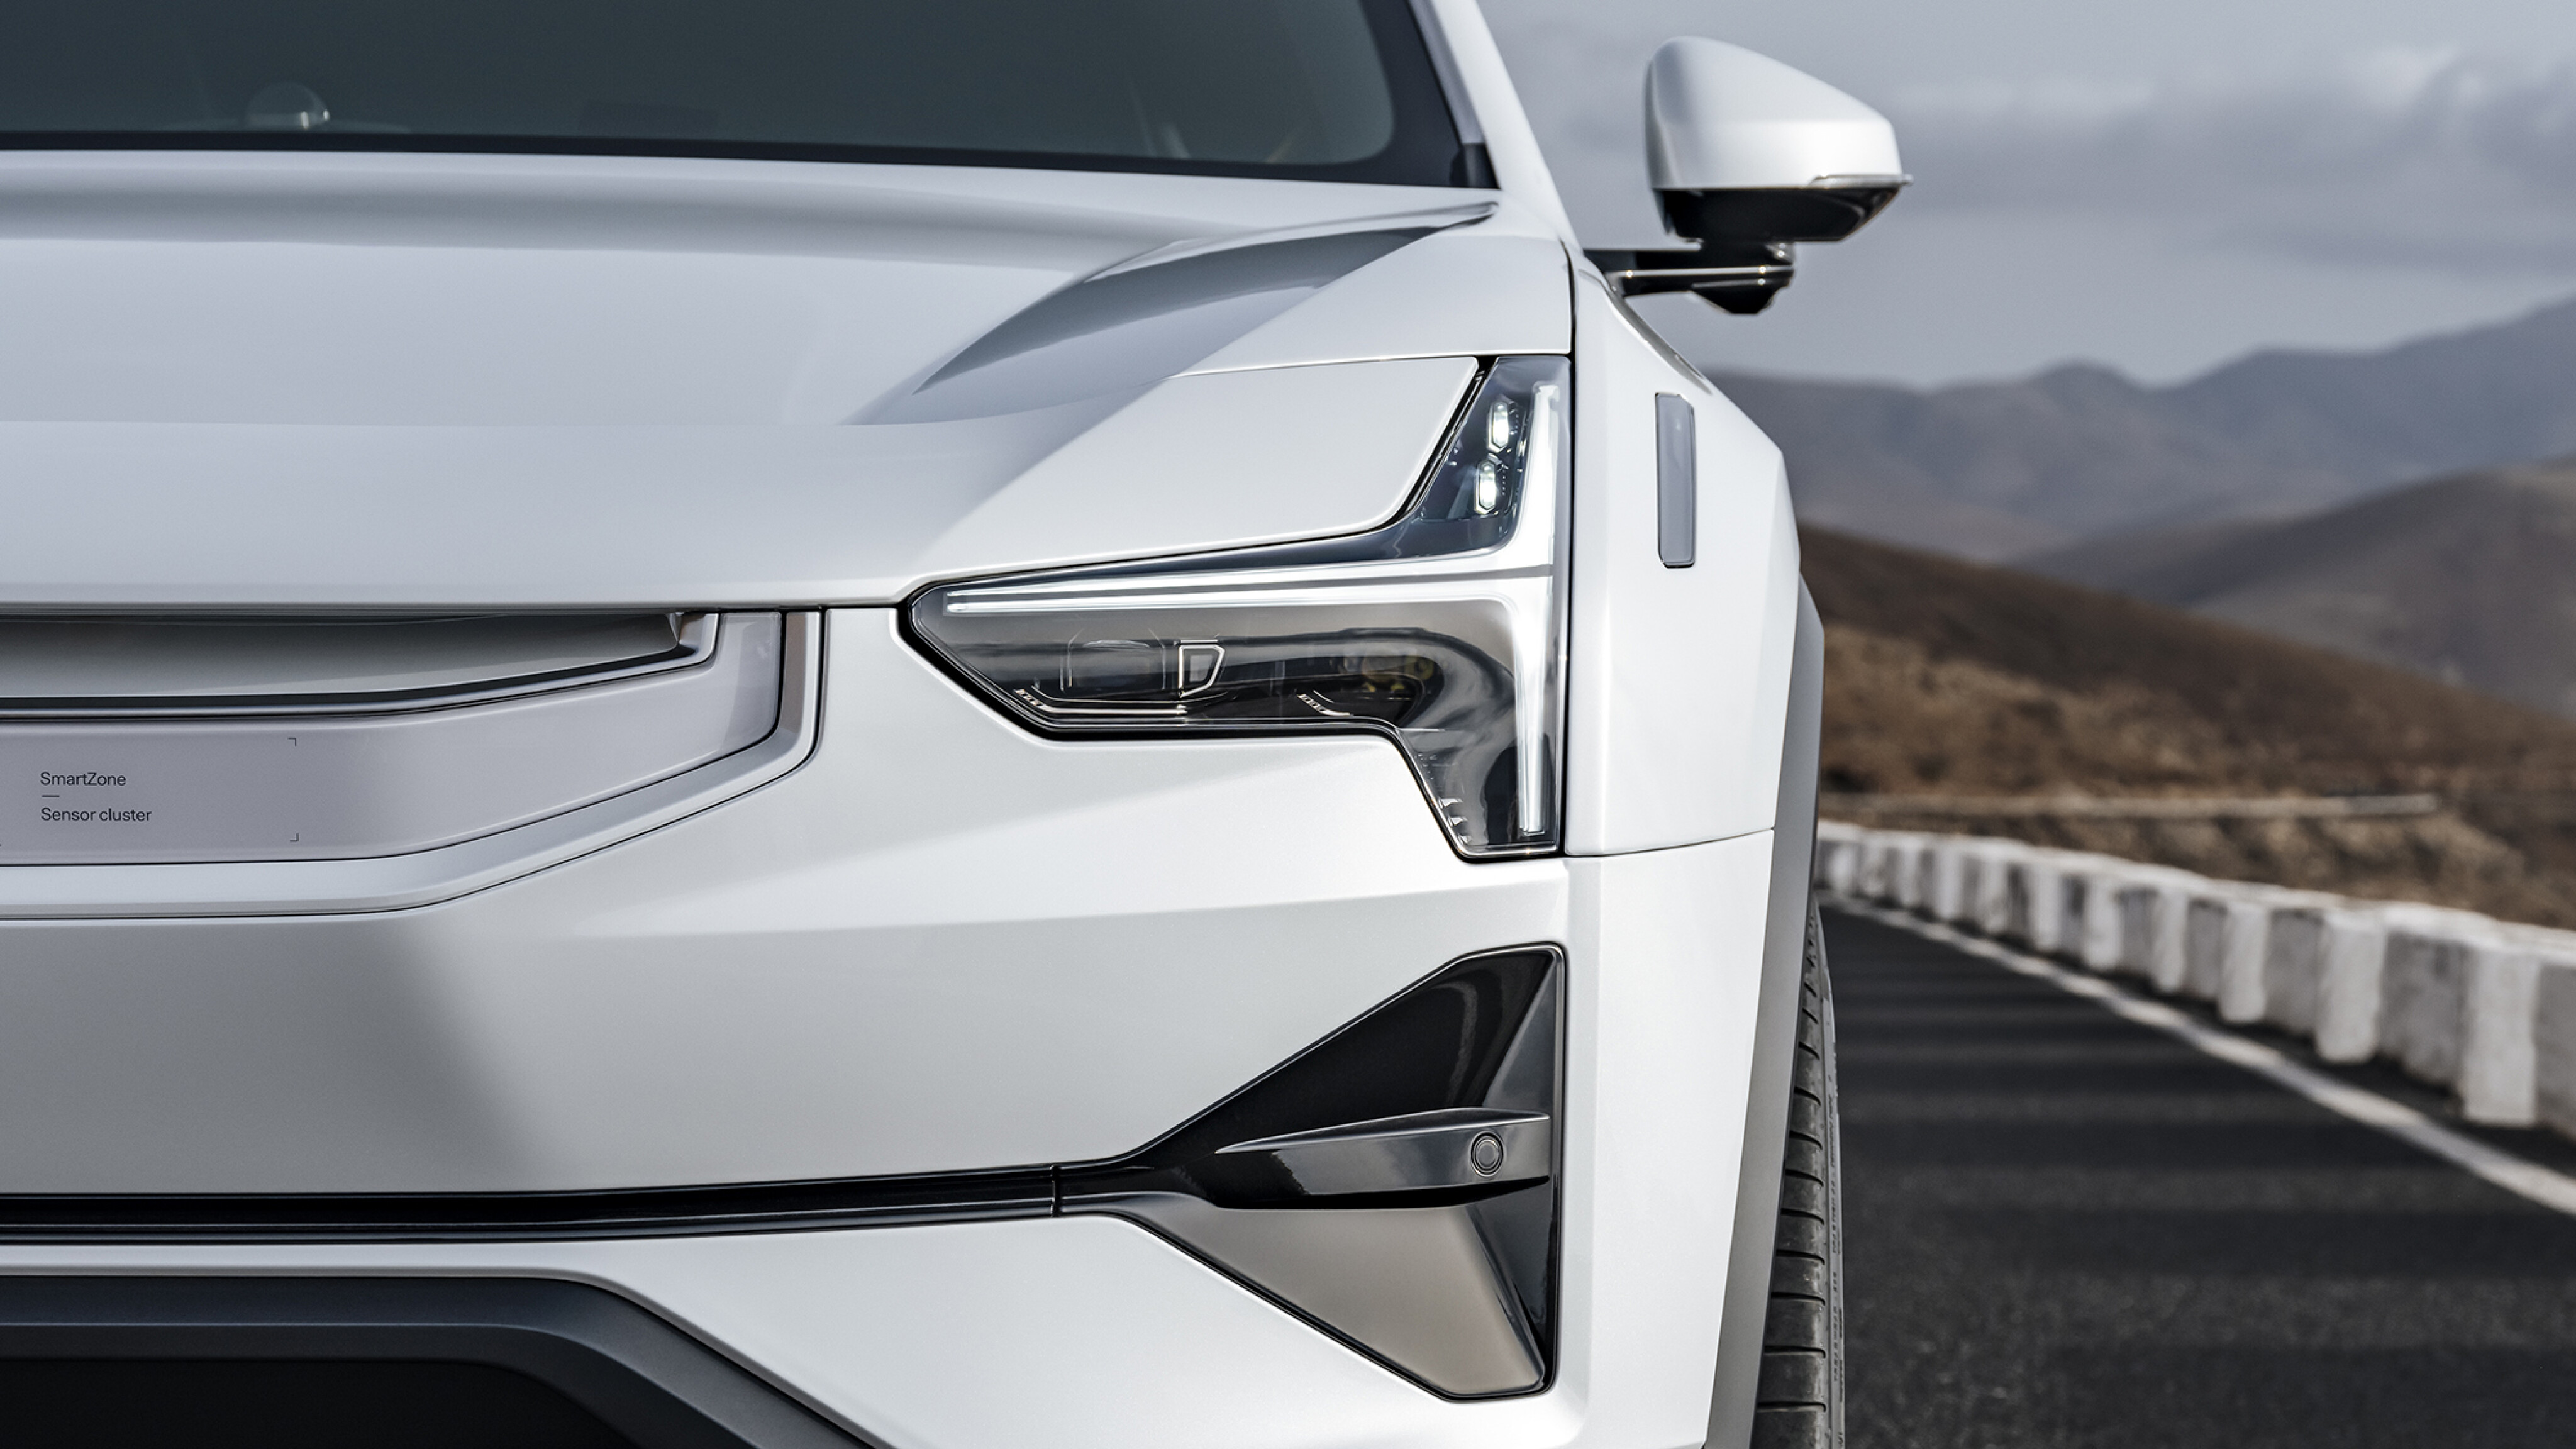 Volvo reveals future EV plans: 1,000 km range target, in-house OS